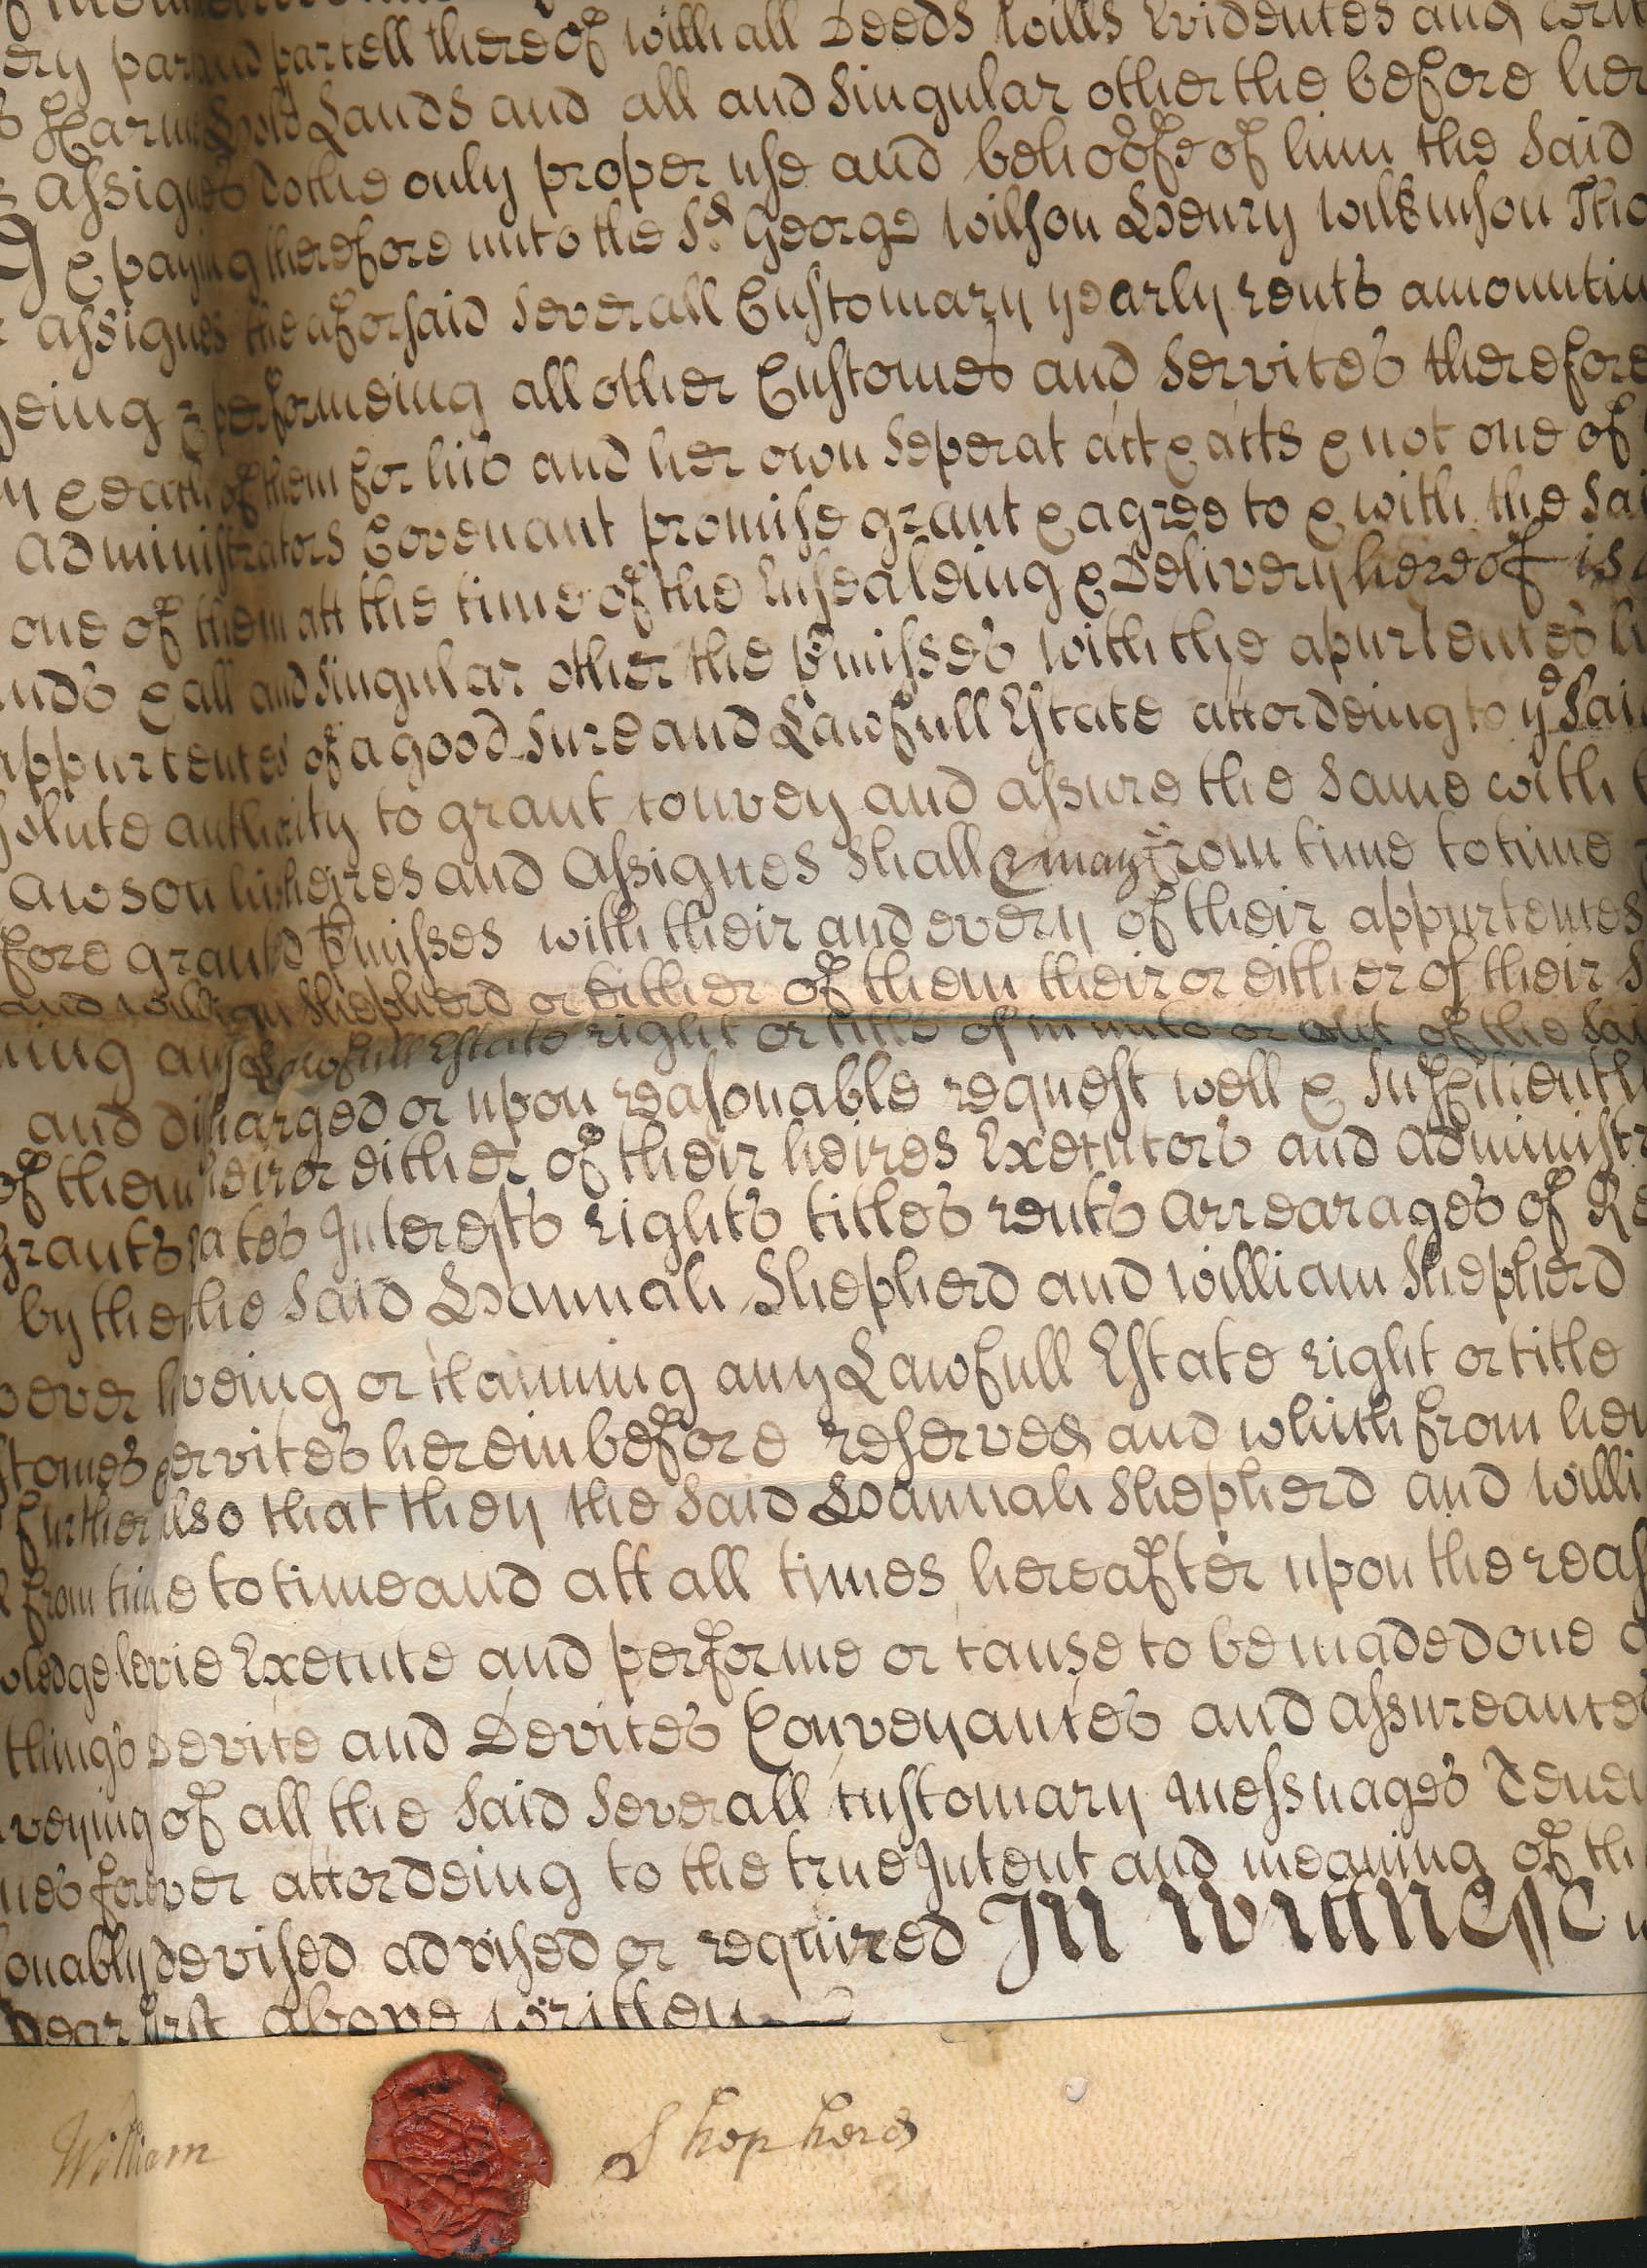 Indenture written between William Shepherd of Kendall and Robert Dawson of Sunderland with seals of William and Hannah Shepherd. 1725.